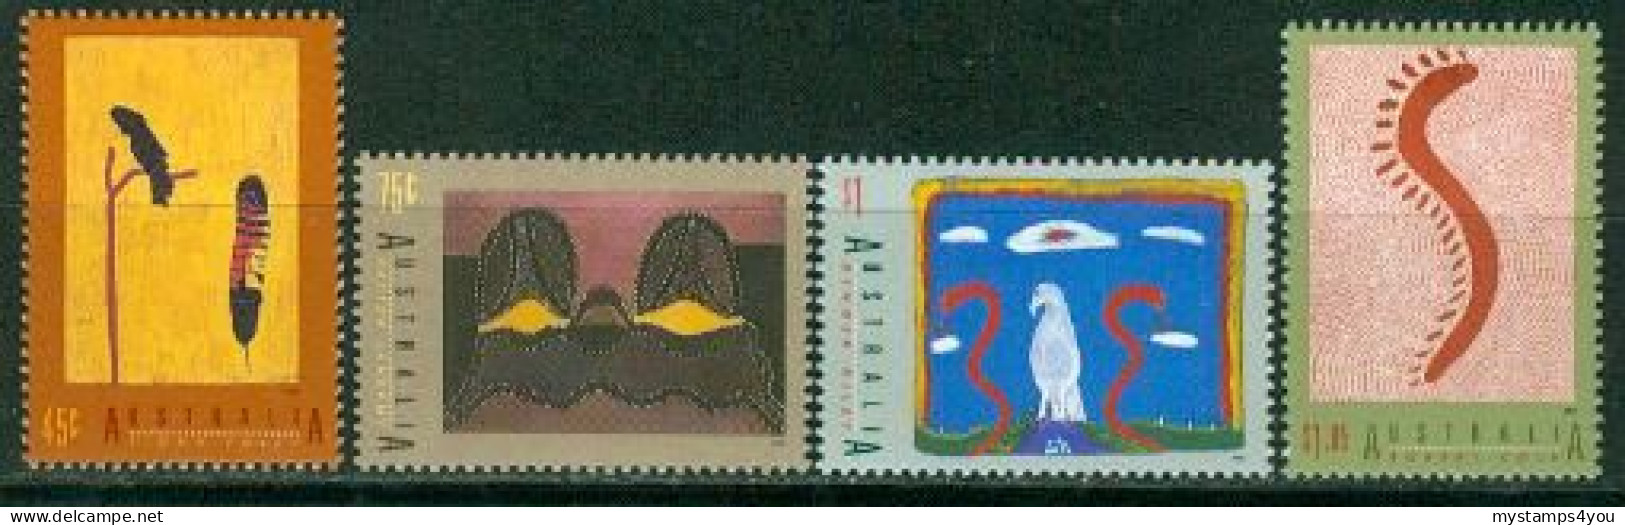 Bm Australia 1993 MiNr 1360-1363 MNH | International Year Of Indigenous Peoples. Aboriginal Art #kar-1001-1 - Mint Stamps